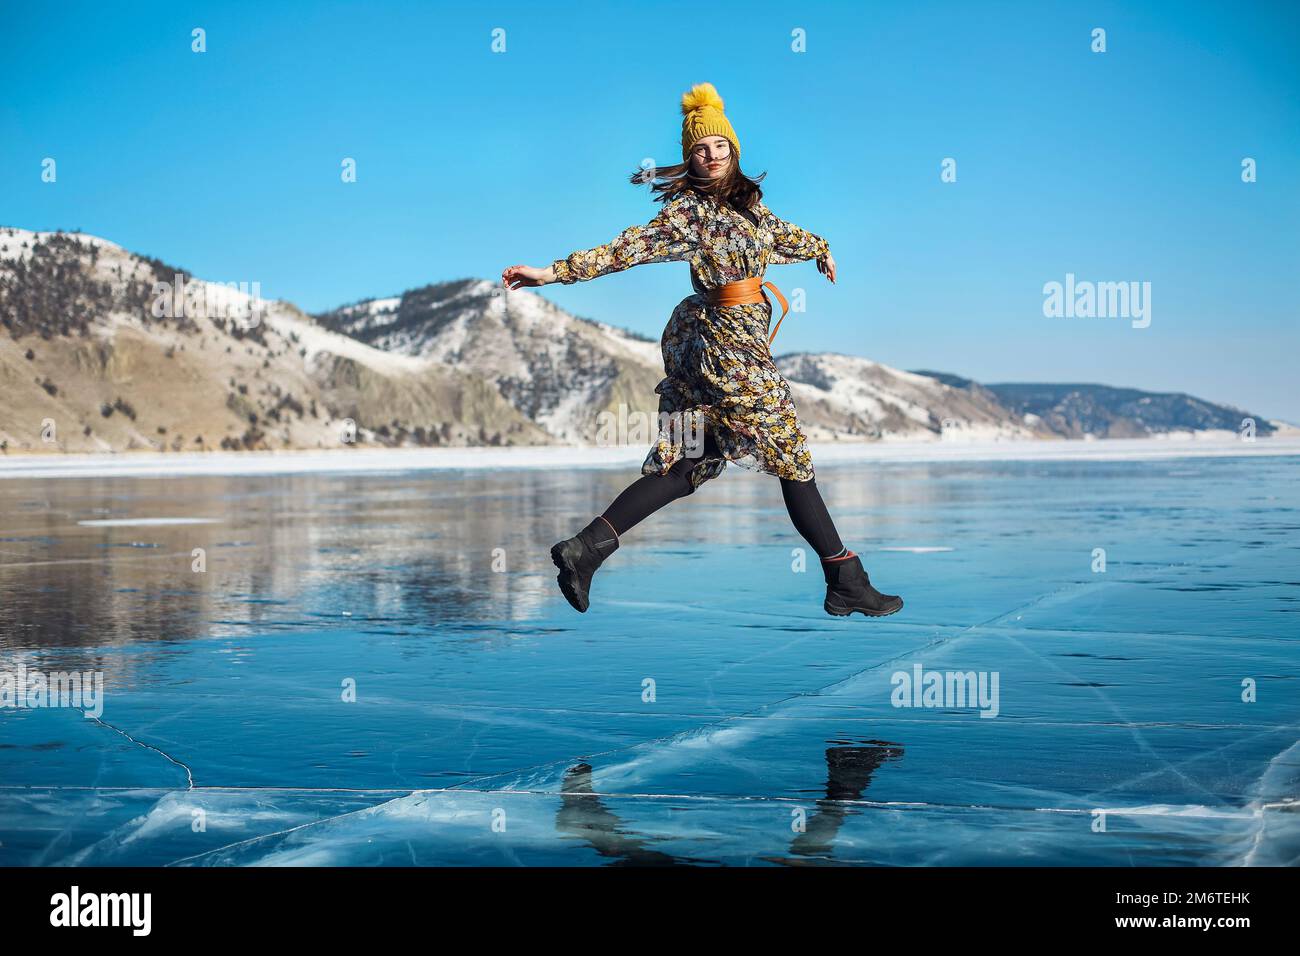 Fashionable image of a stunning woman posing on Baikal Lake ice wearing yellow hat Stock Photo